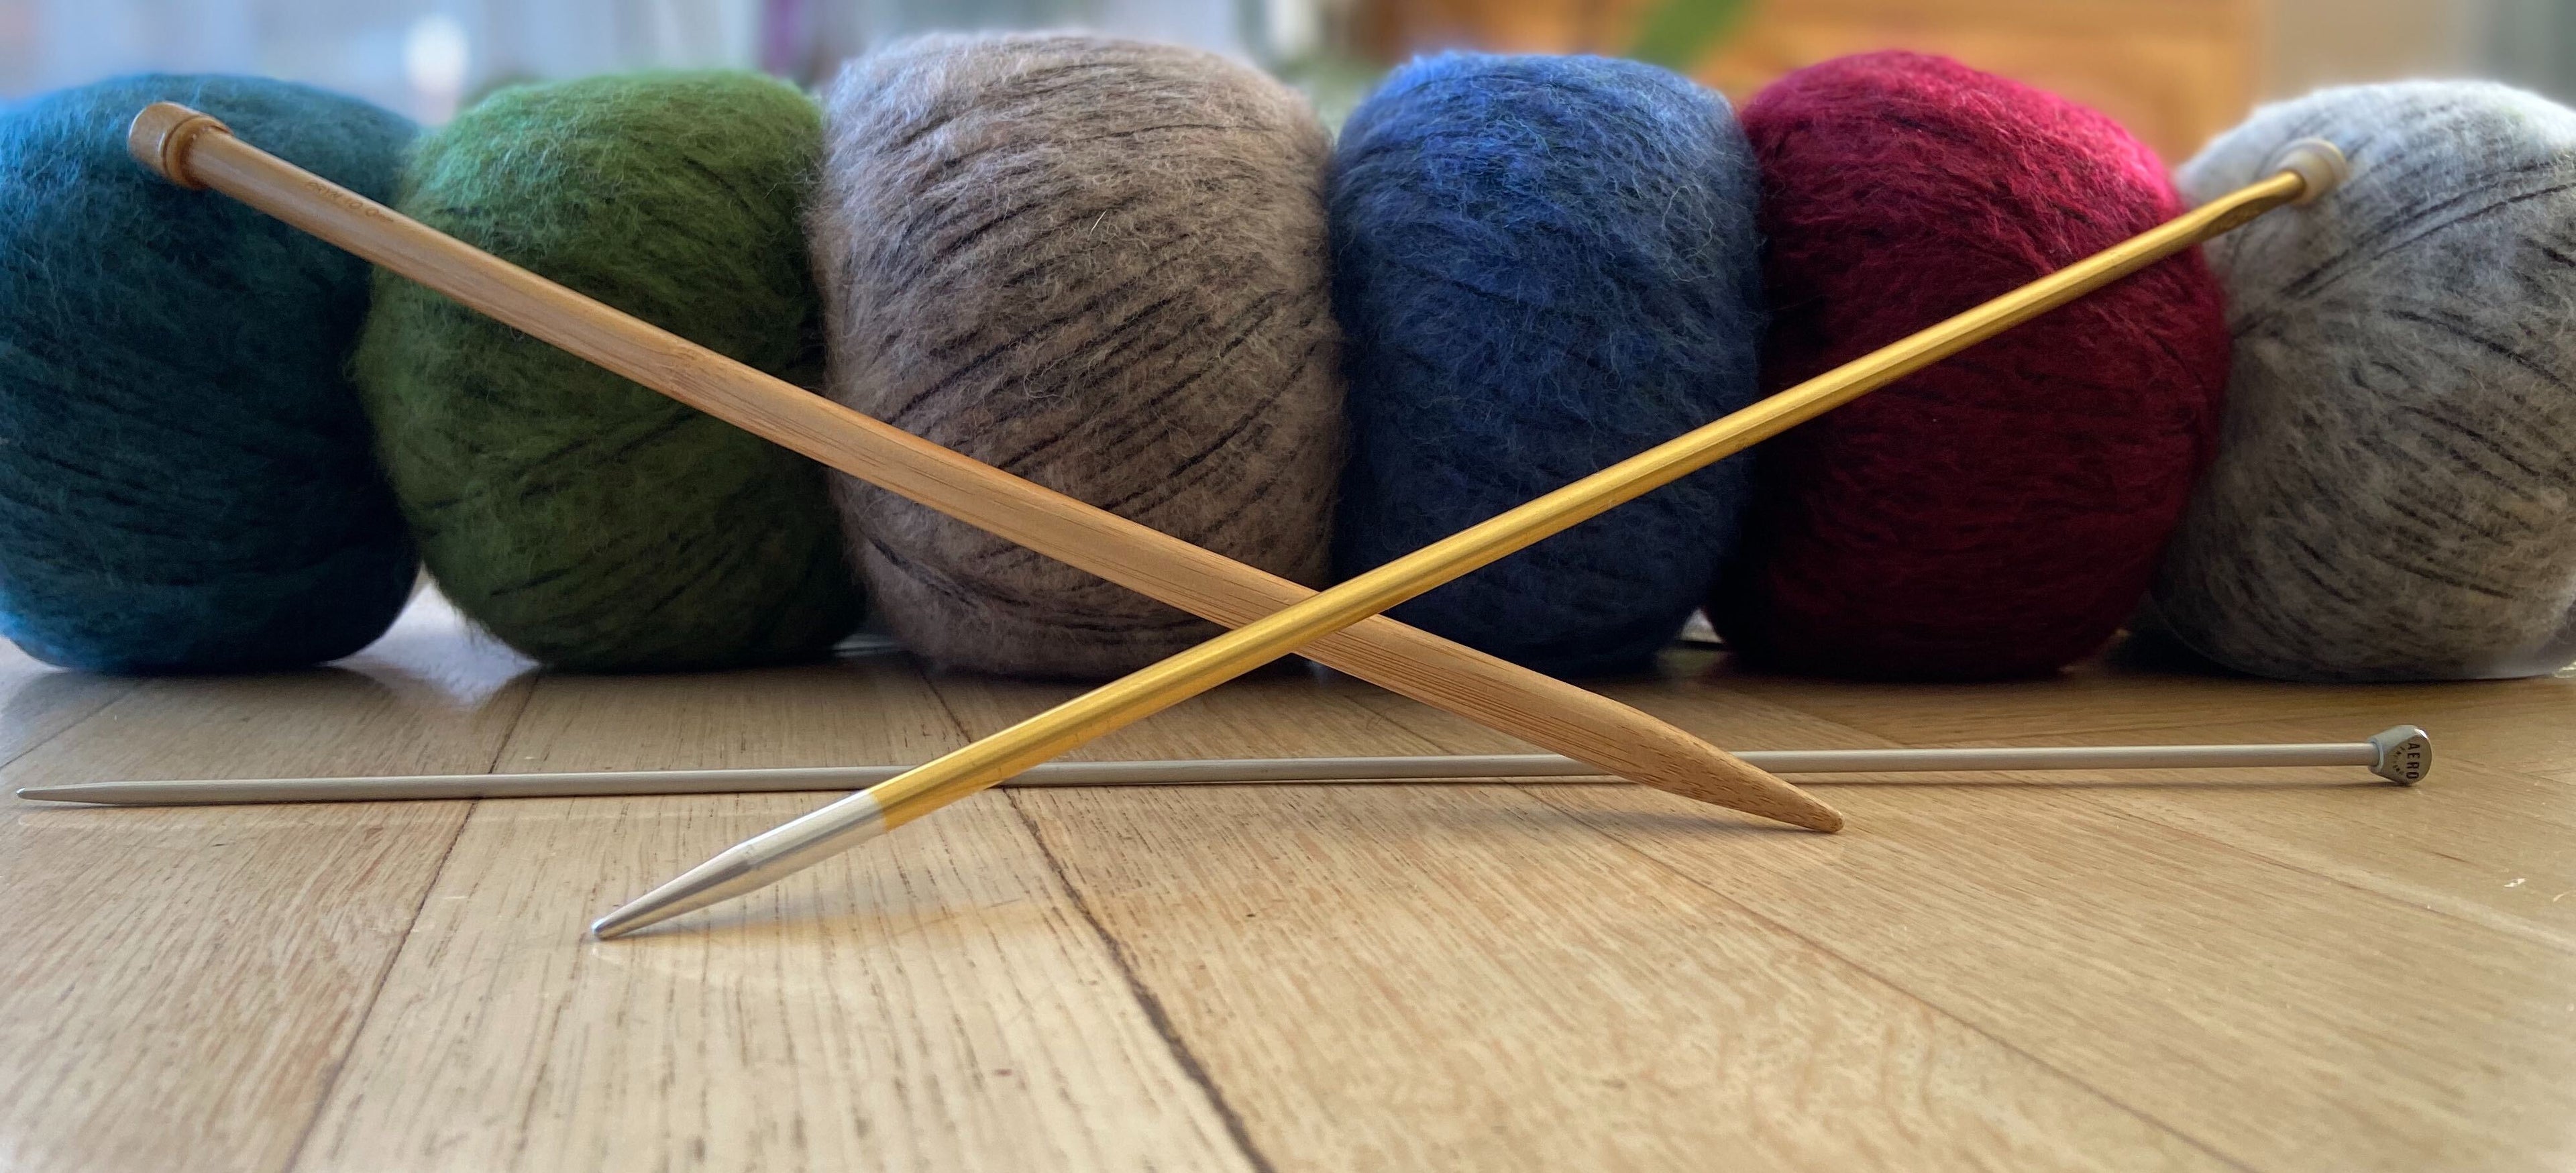 Wolle, Stricken, Stricknadel, Knitting, Wool, handmade, Handarbeit